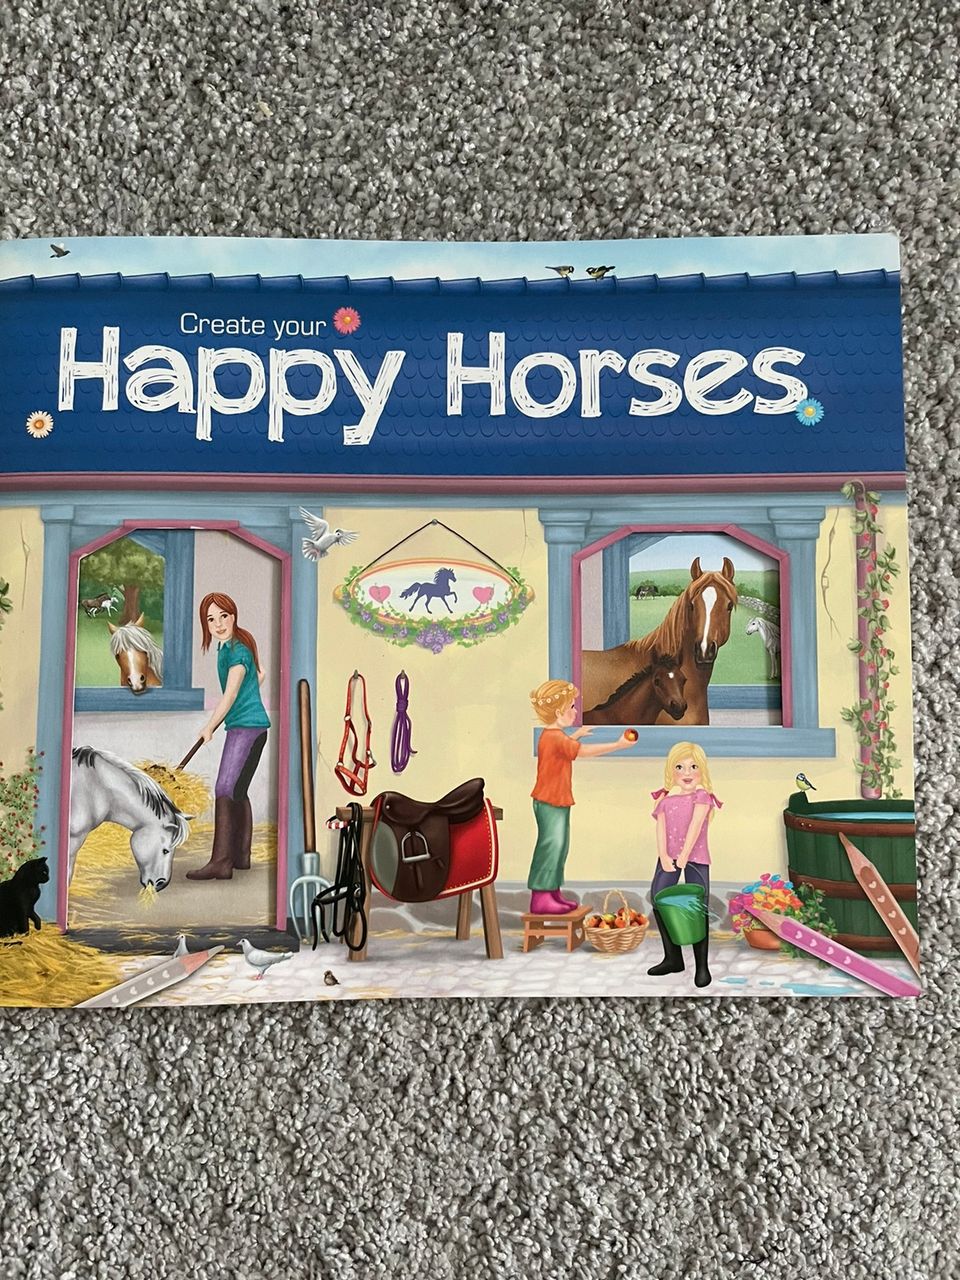 Happy horses tarrakirja